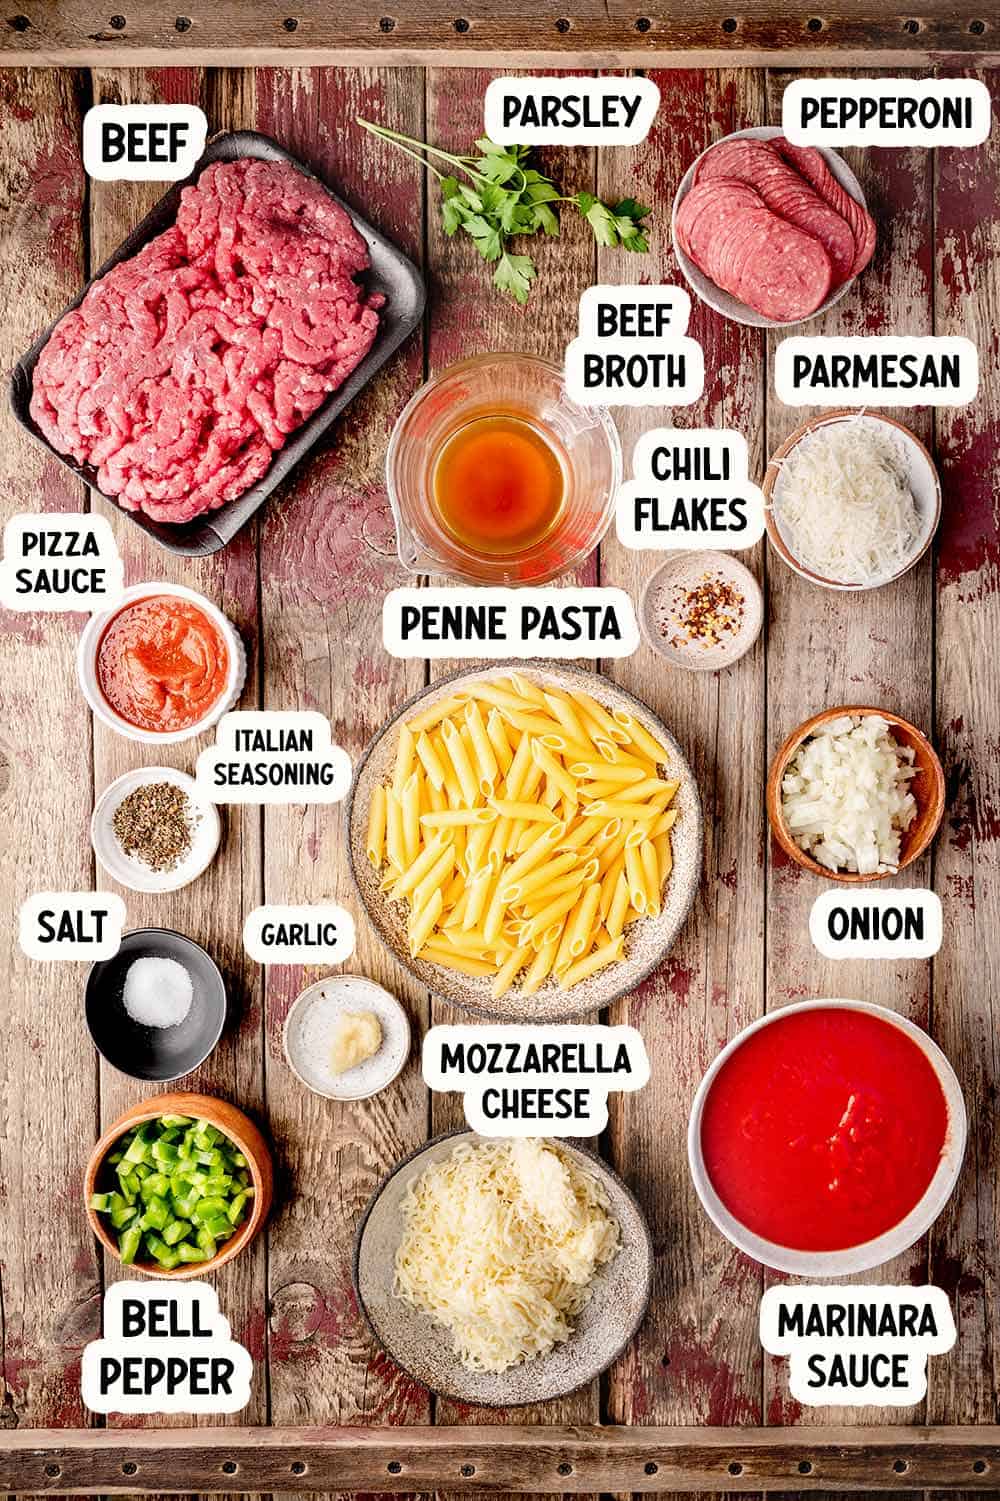 Ingredients to make pizza pasta casserole